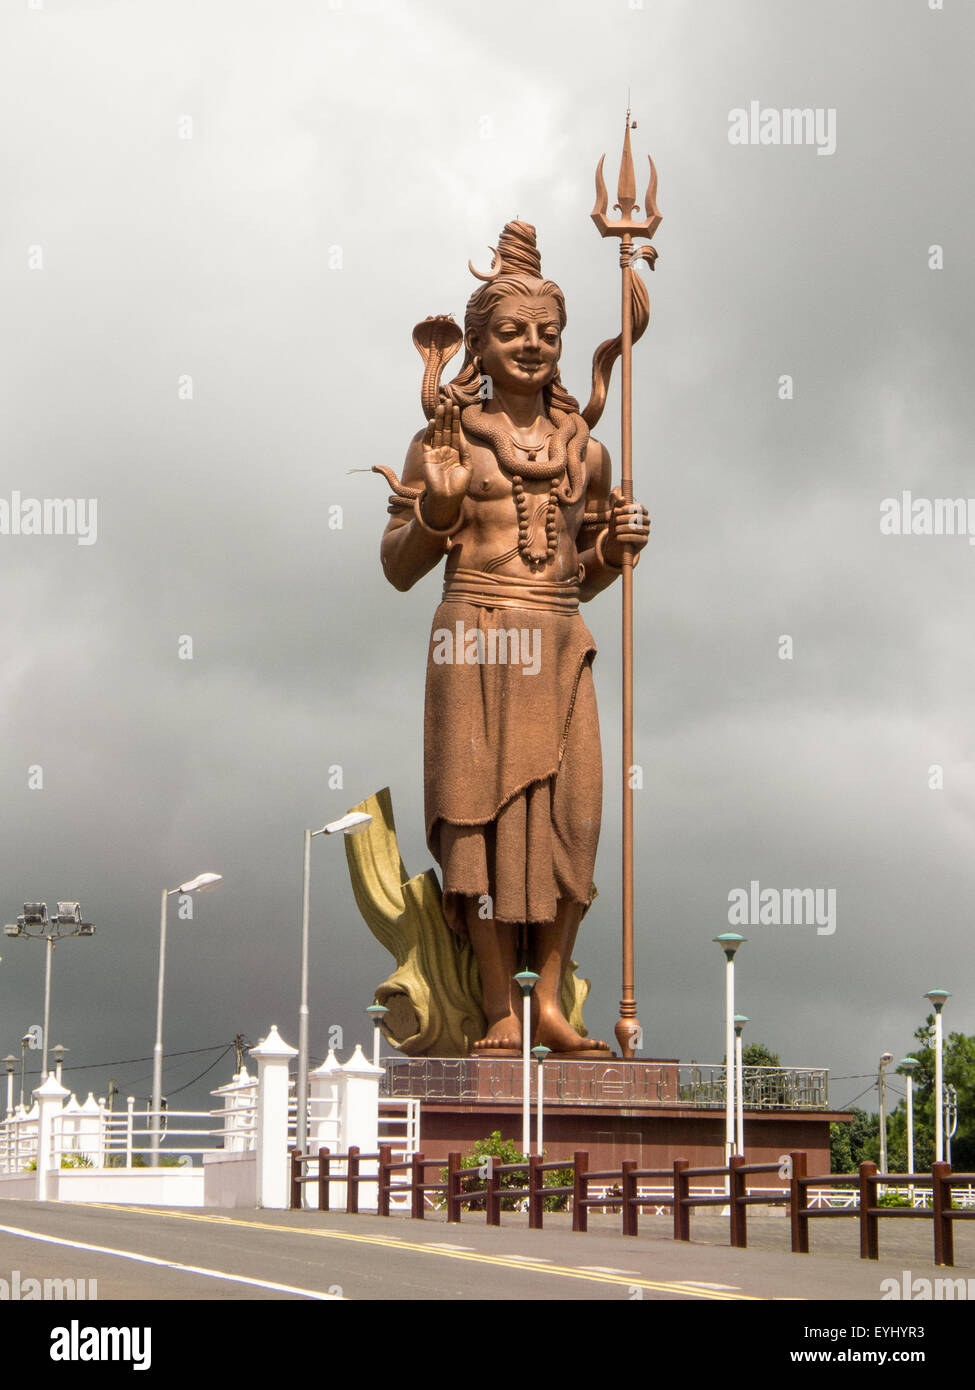 Maurizio. Immagine grande di Mangal Mahadev - Shiva Statua di Ganga Talao da via dei pellegrini. La statua è di 33 metri di altezza. Foto Stock